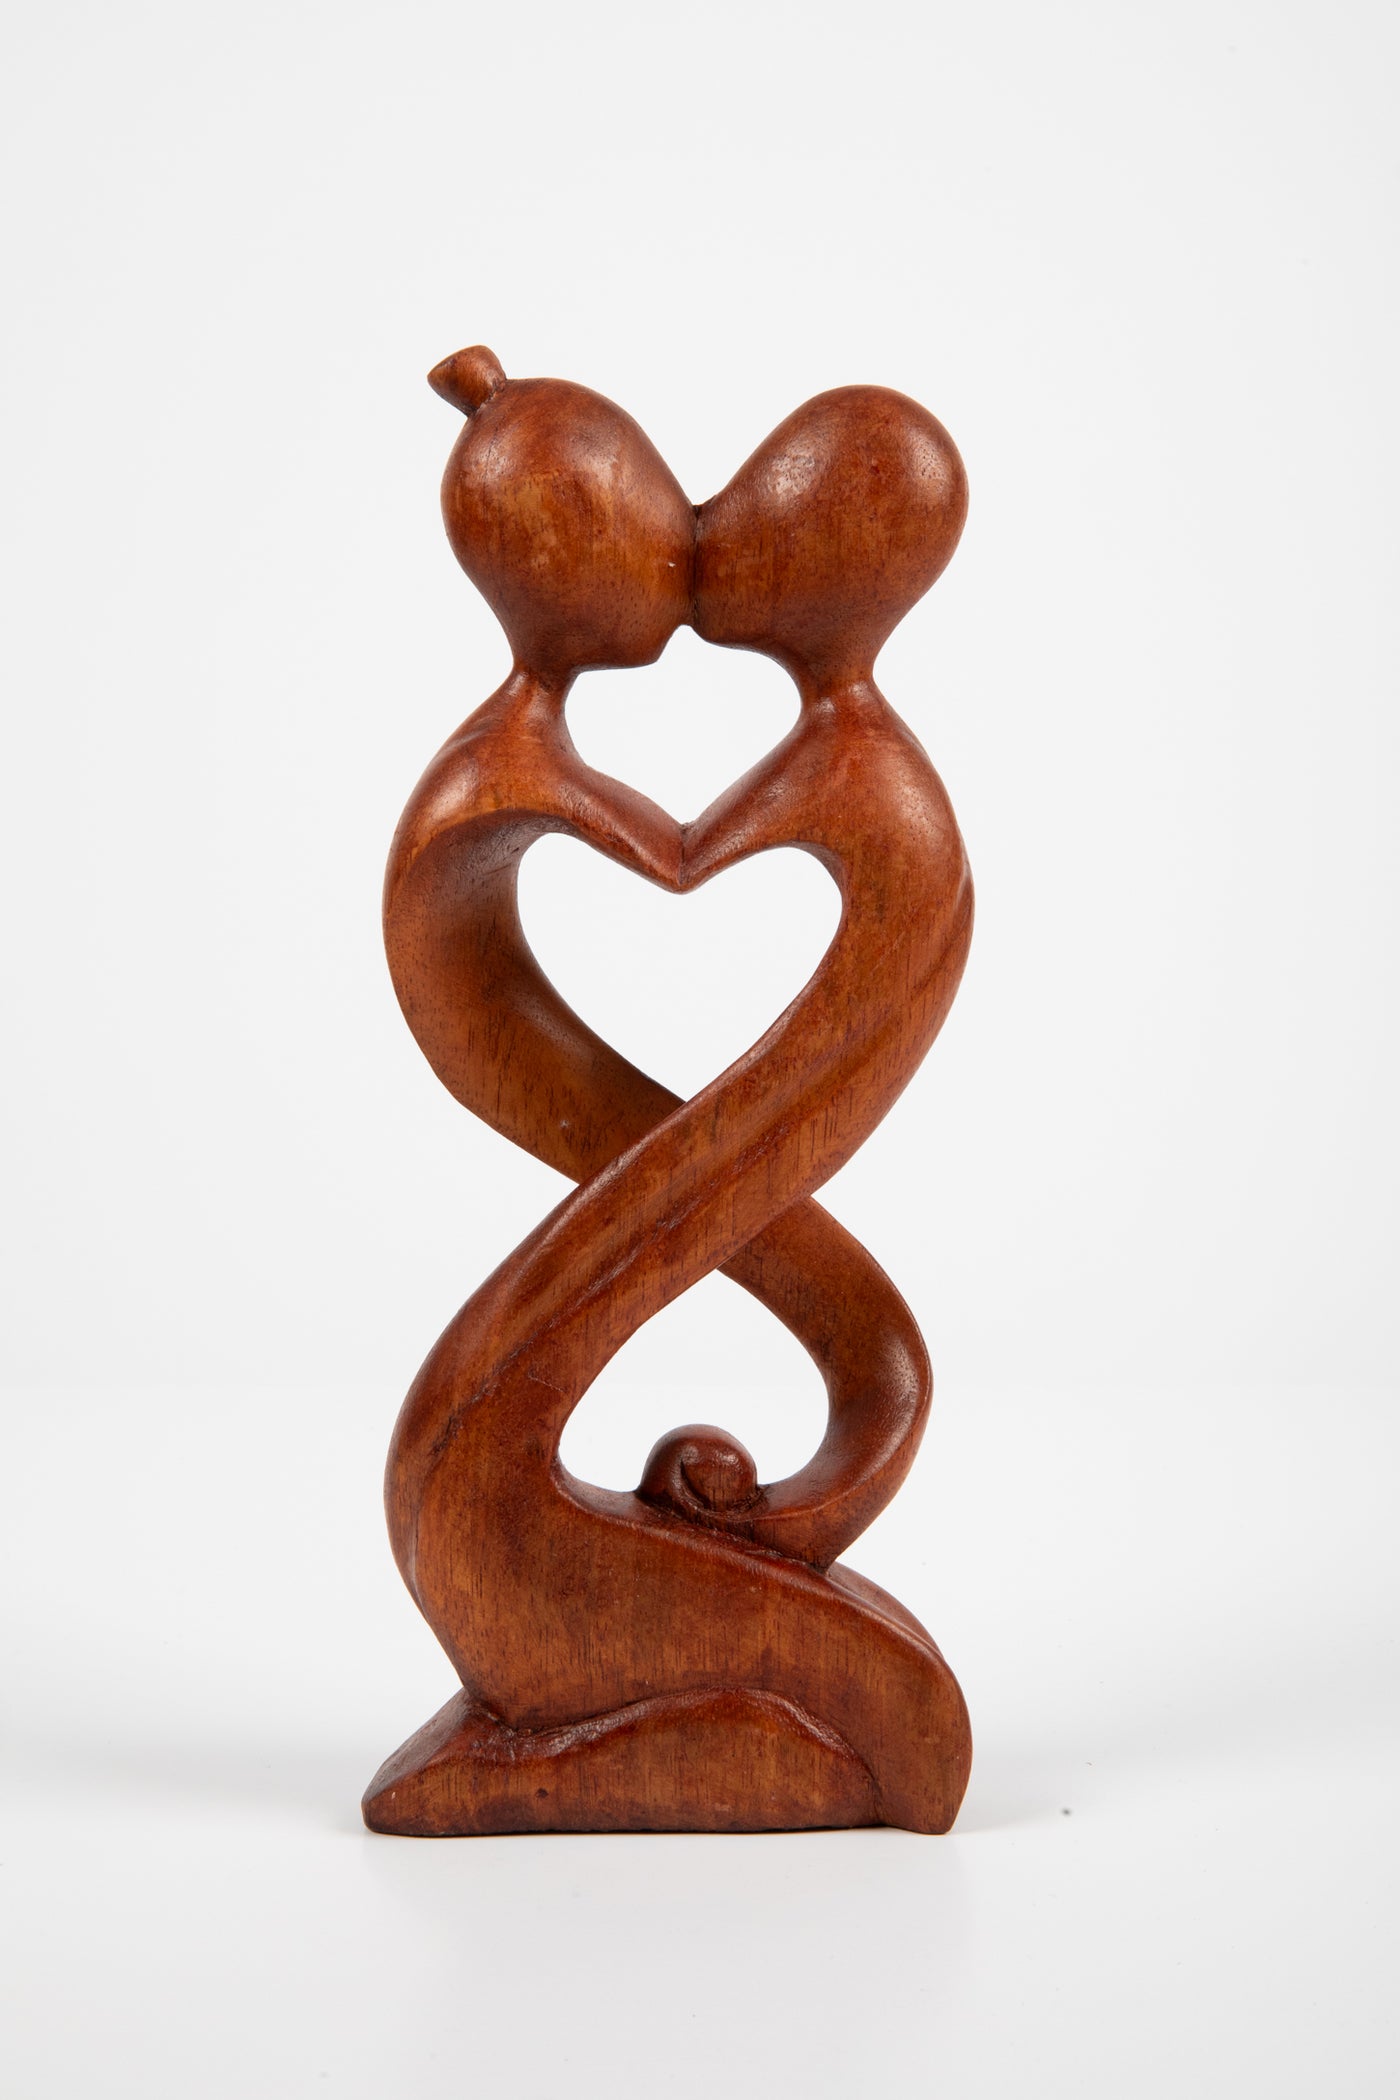 Kissing Carved Wooden Sculpture